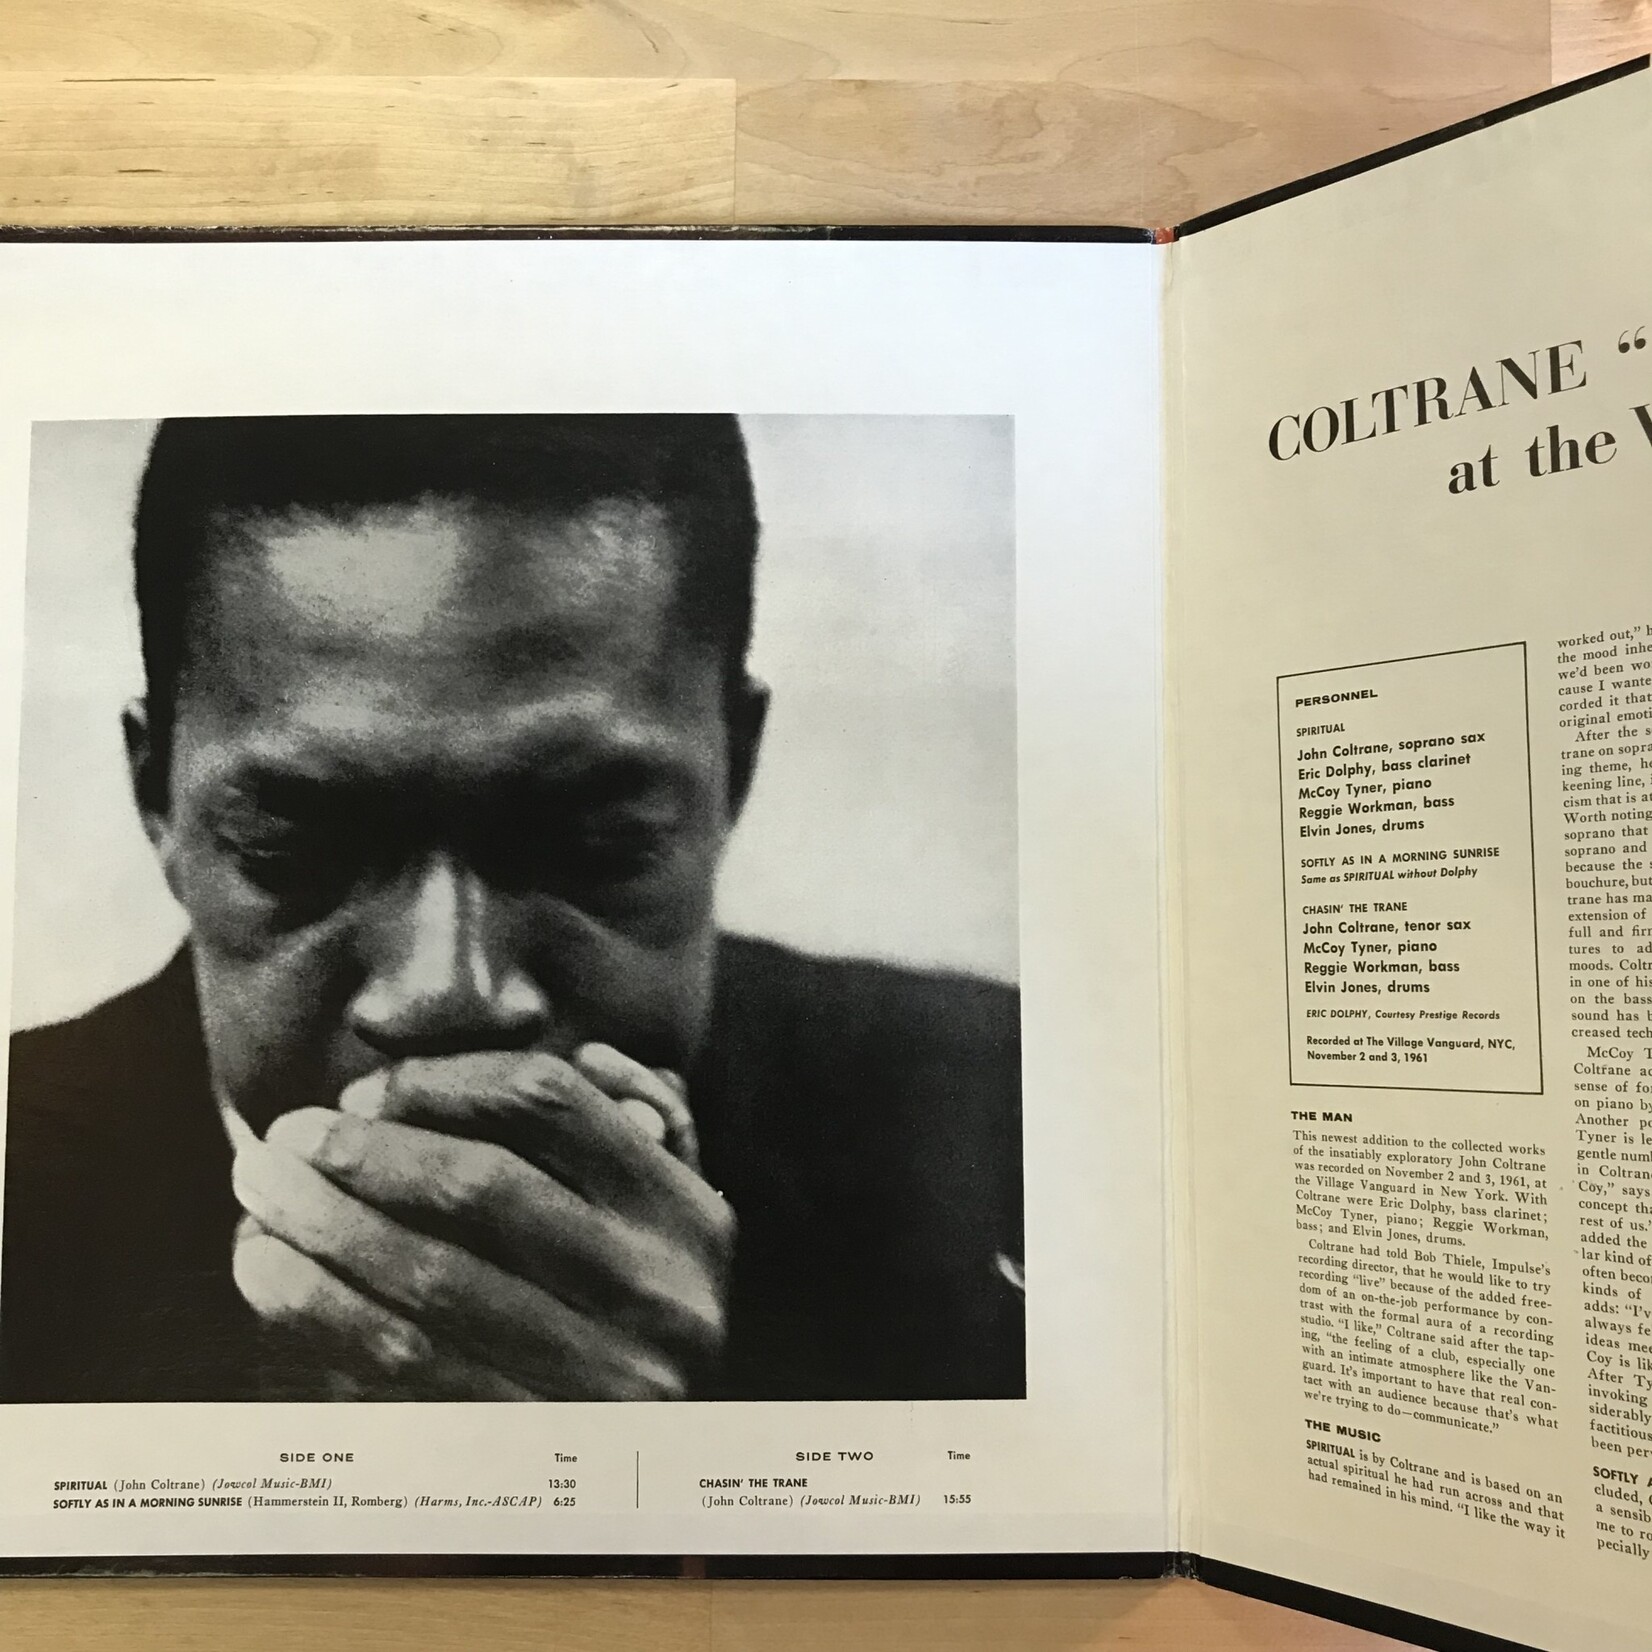 John Coltrane - Coltrane “Live” At The Village Vanguard (1980) - A10 - Vinyl LP (USED)